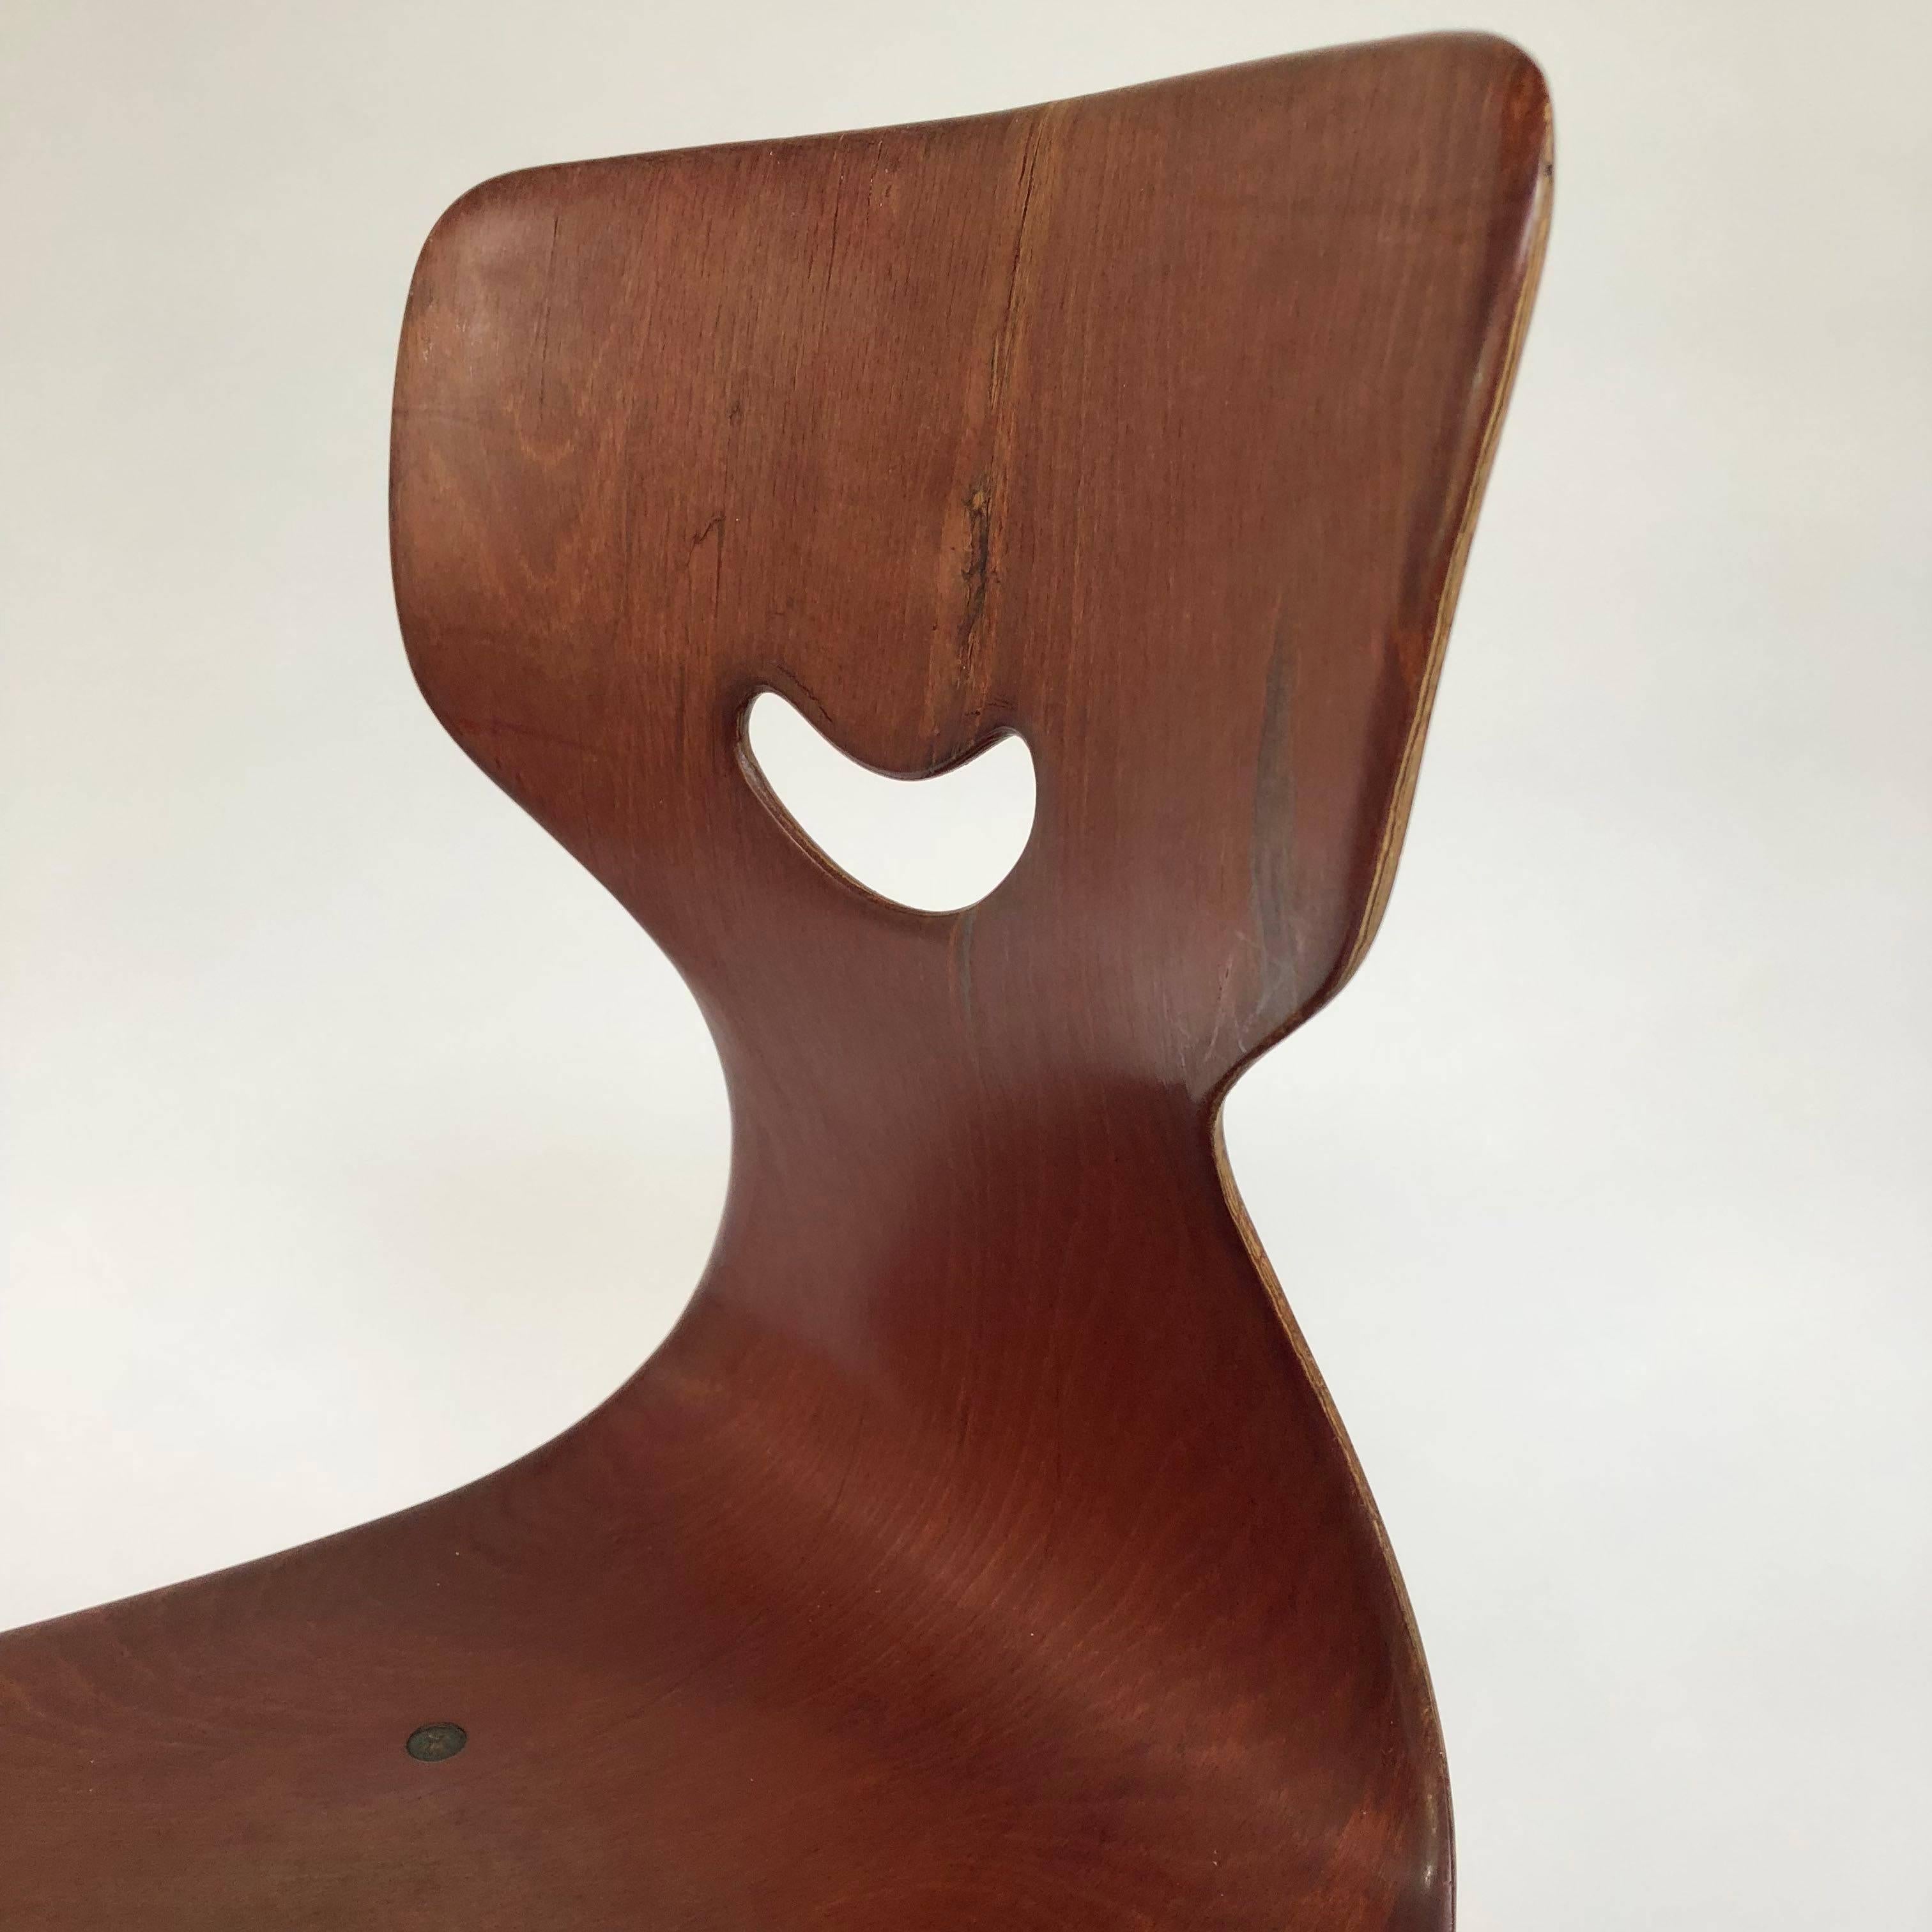 Bakelite Adam Stegner Children's Swivel Chairs by Flötotto 1950s For Sale